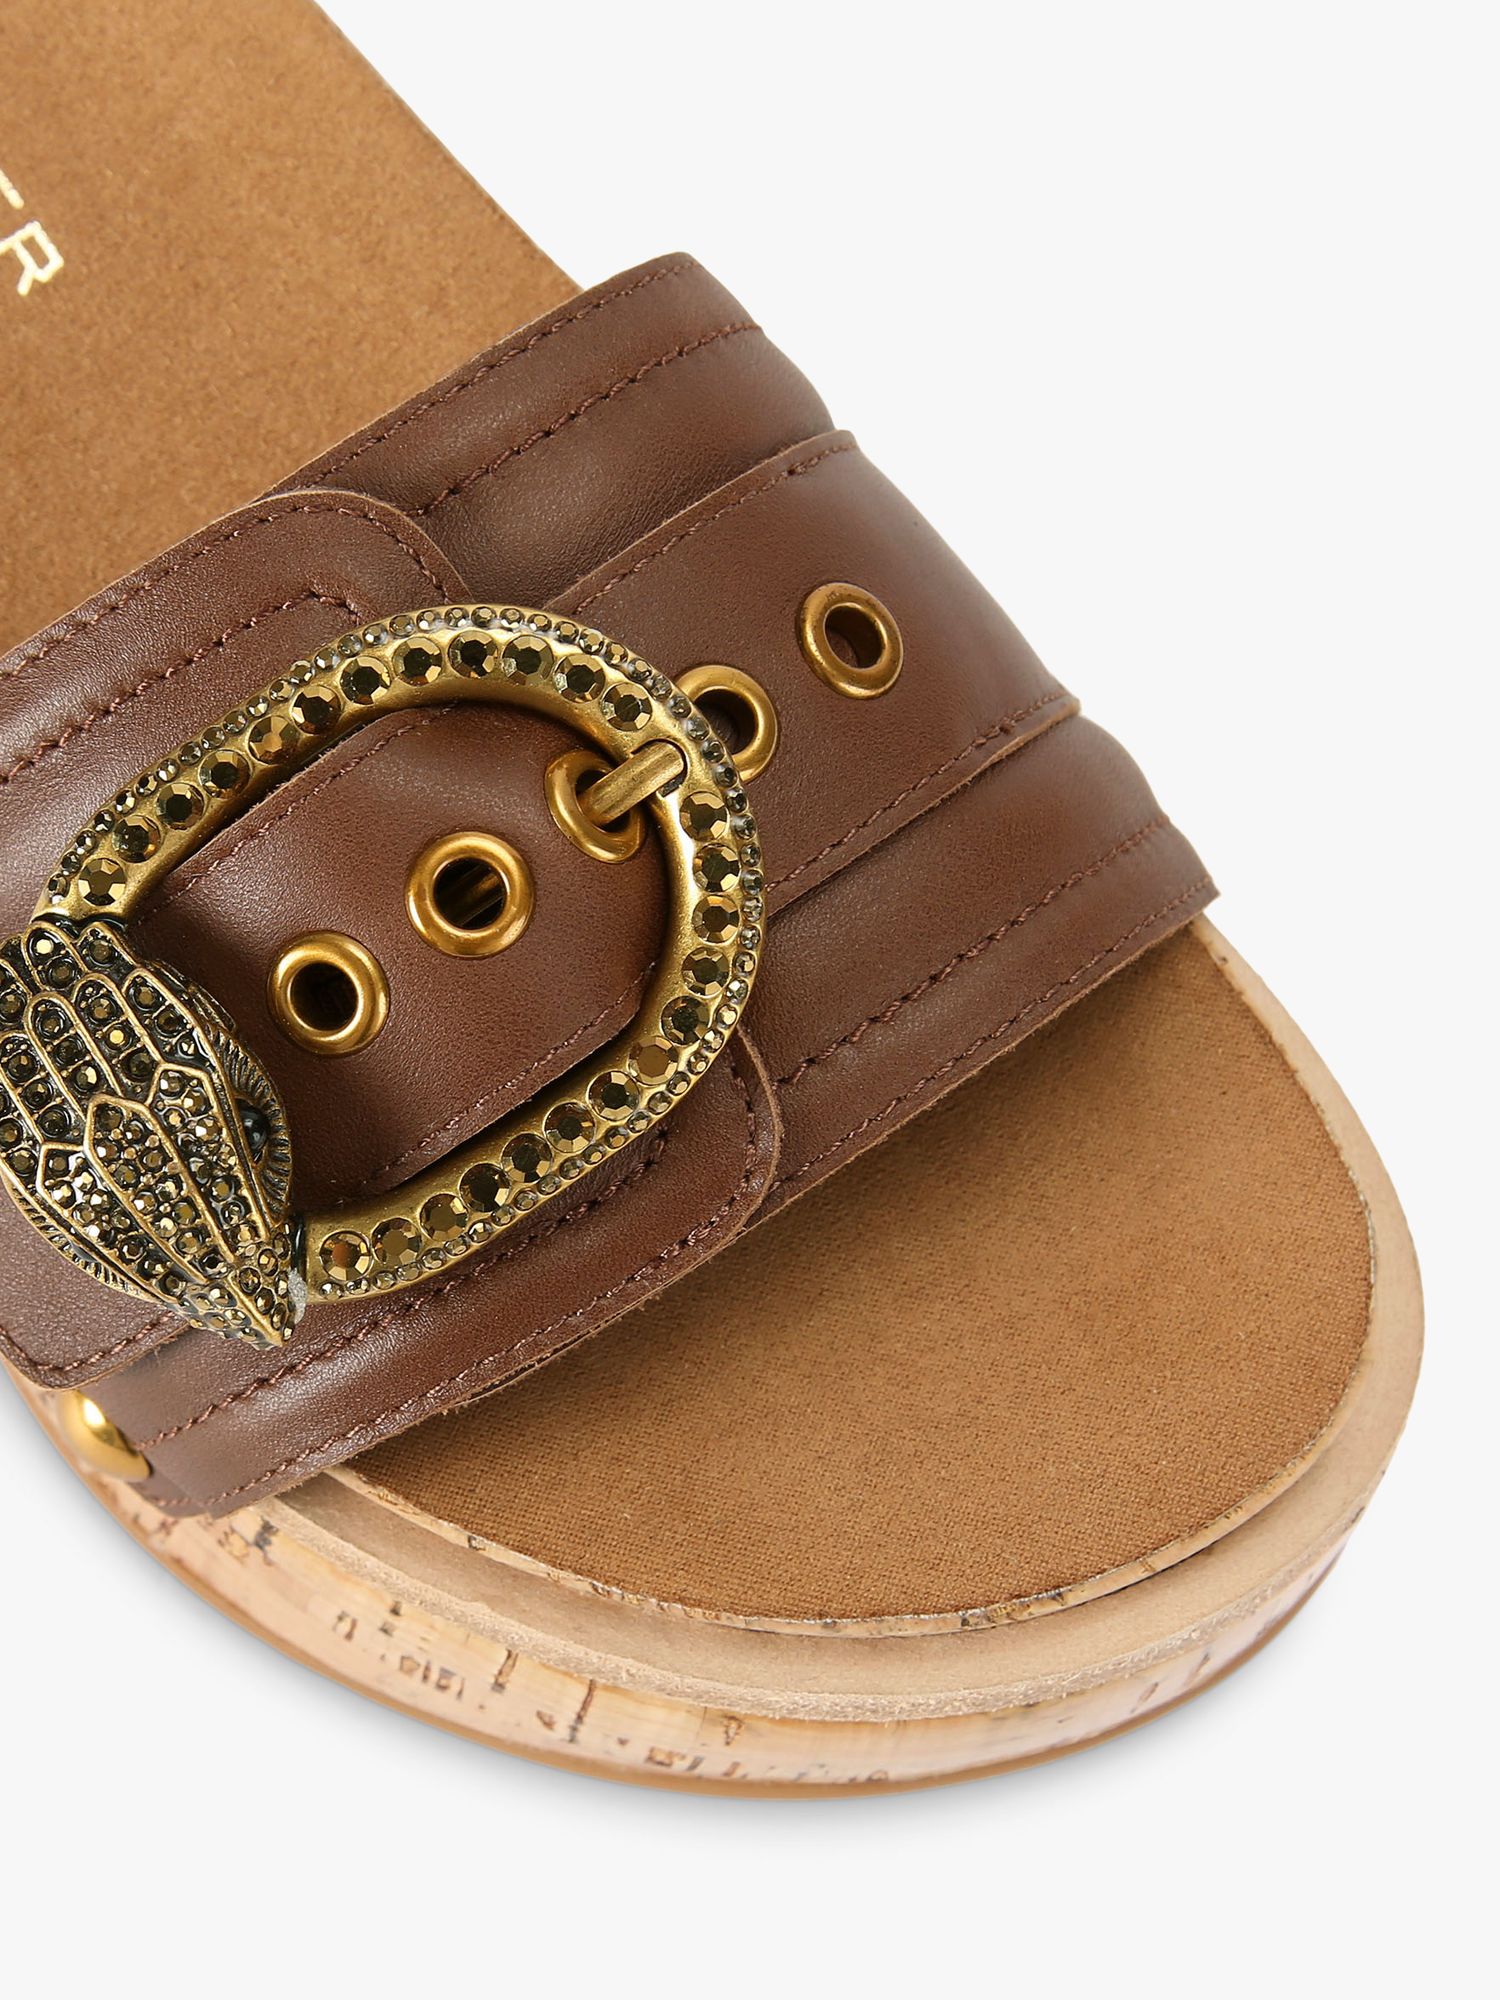 Buy Kurt Geiger London Mayfair Flatform Leather Sandals, Tan Online at johnlewis.com